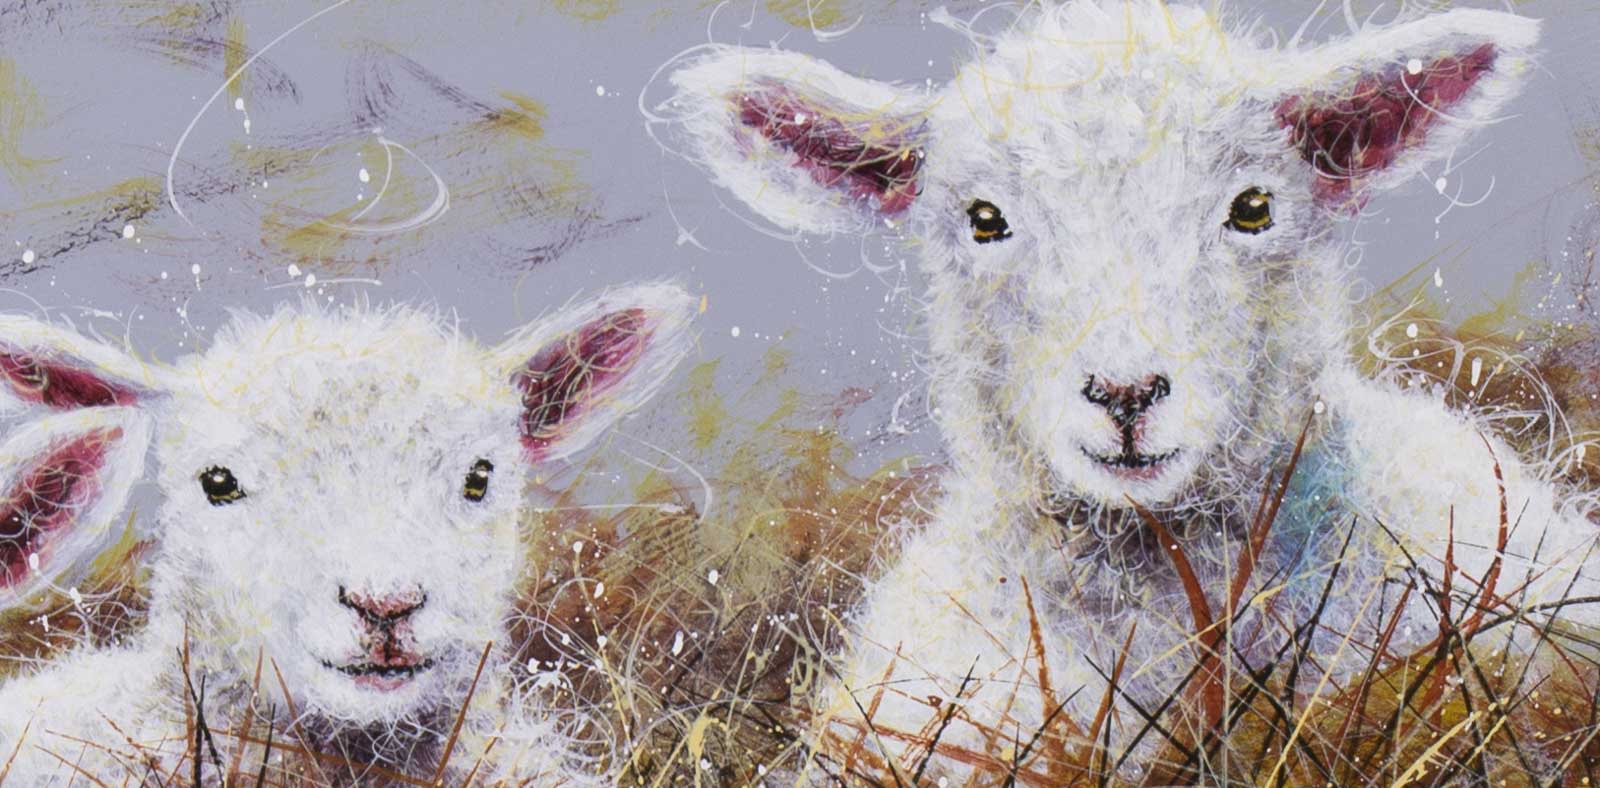 Trio of Lambs